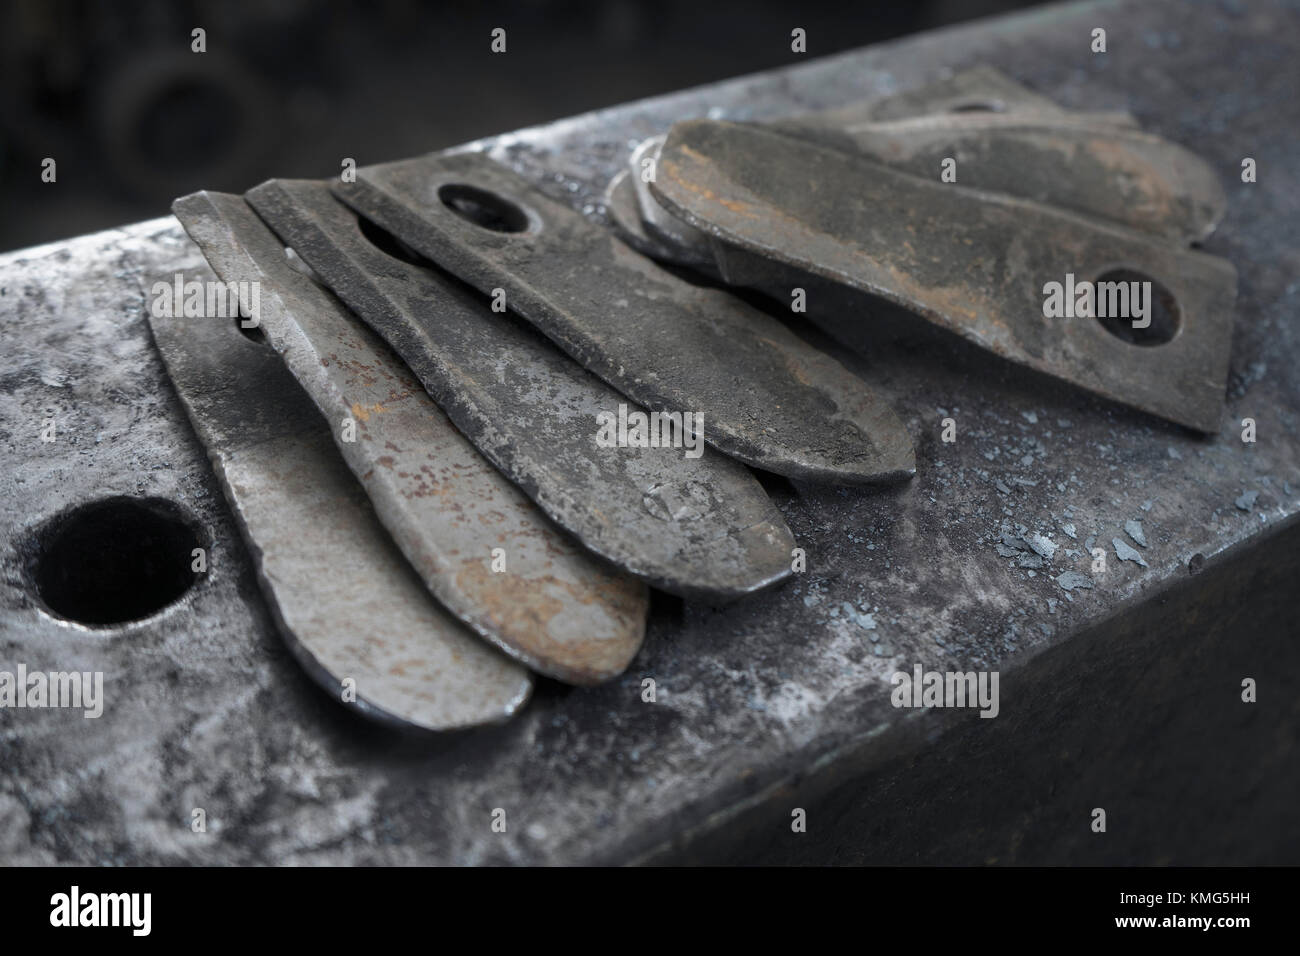 Harvester blades on anvil at blacksmith shop Stock Photo